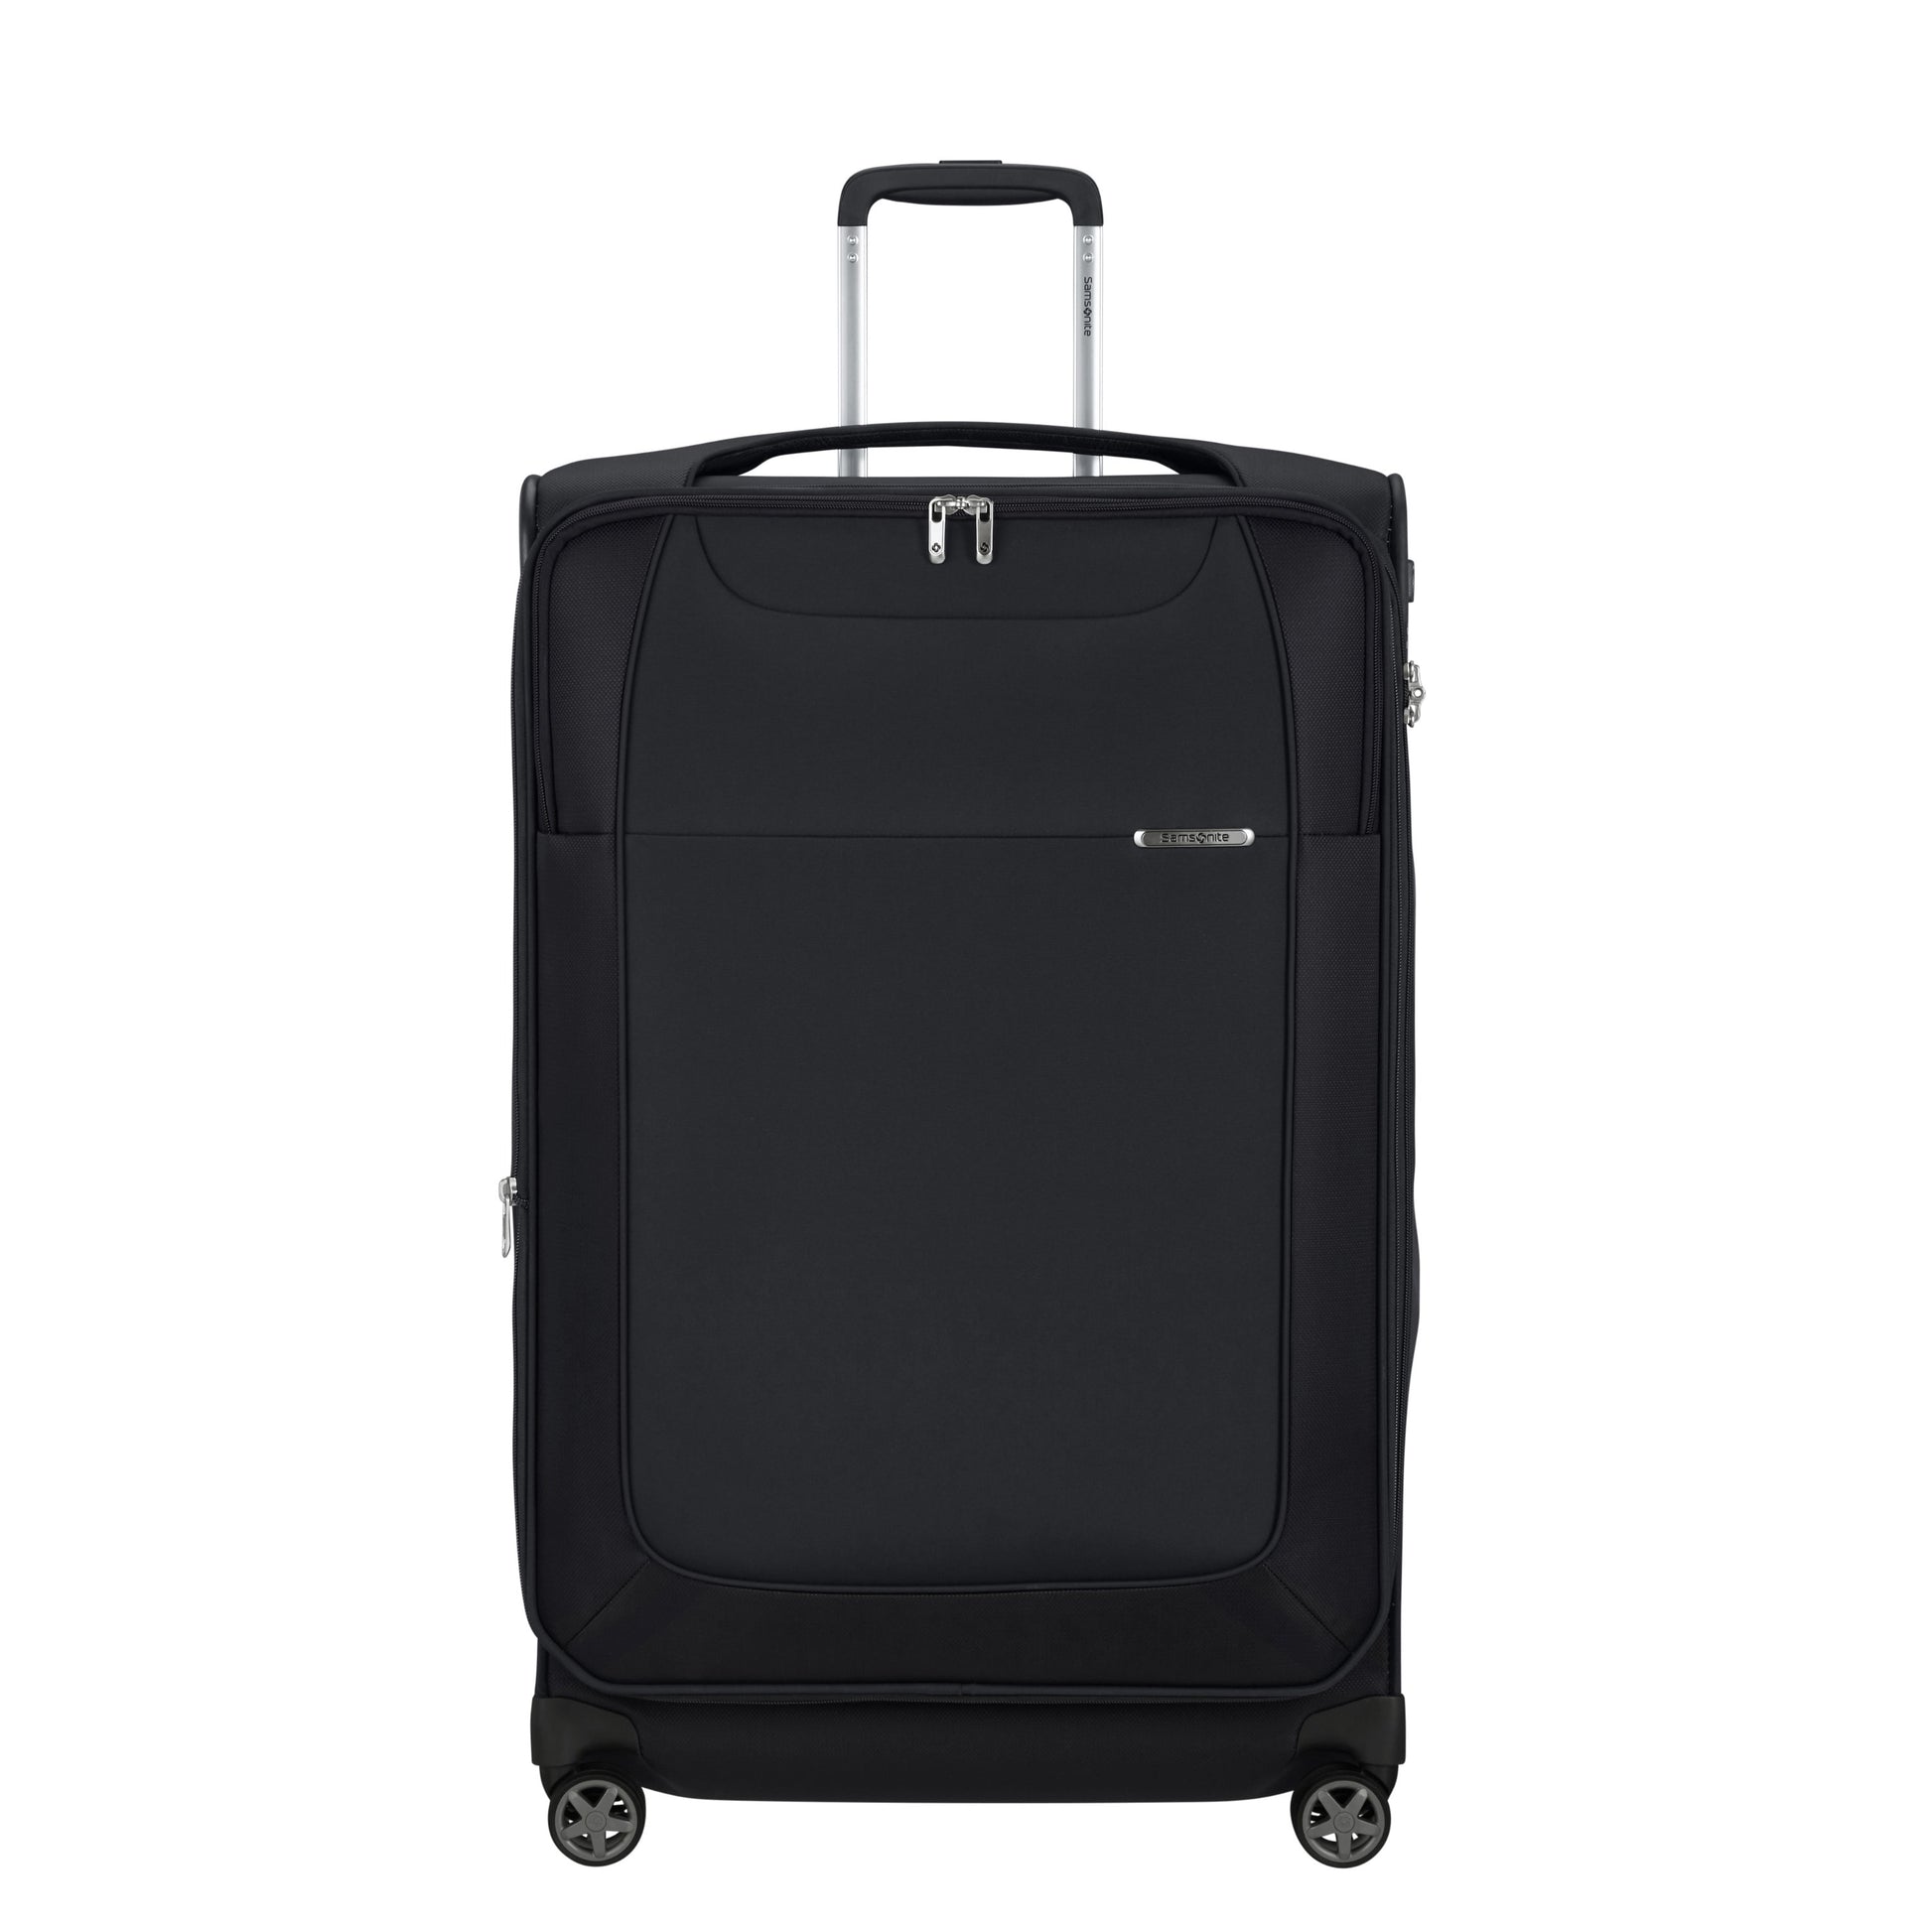 Samsonite D'Lite Spinner Large Luggage - Black